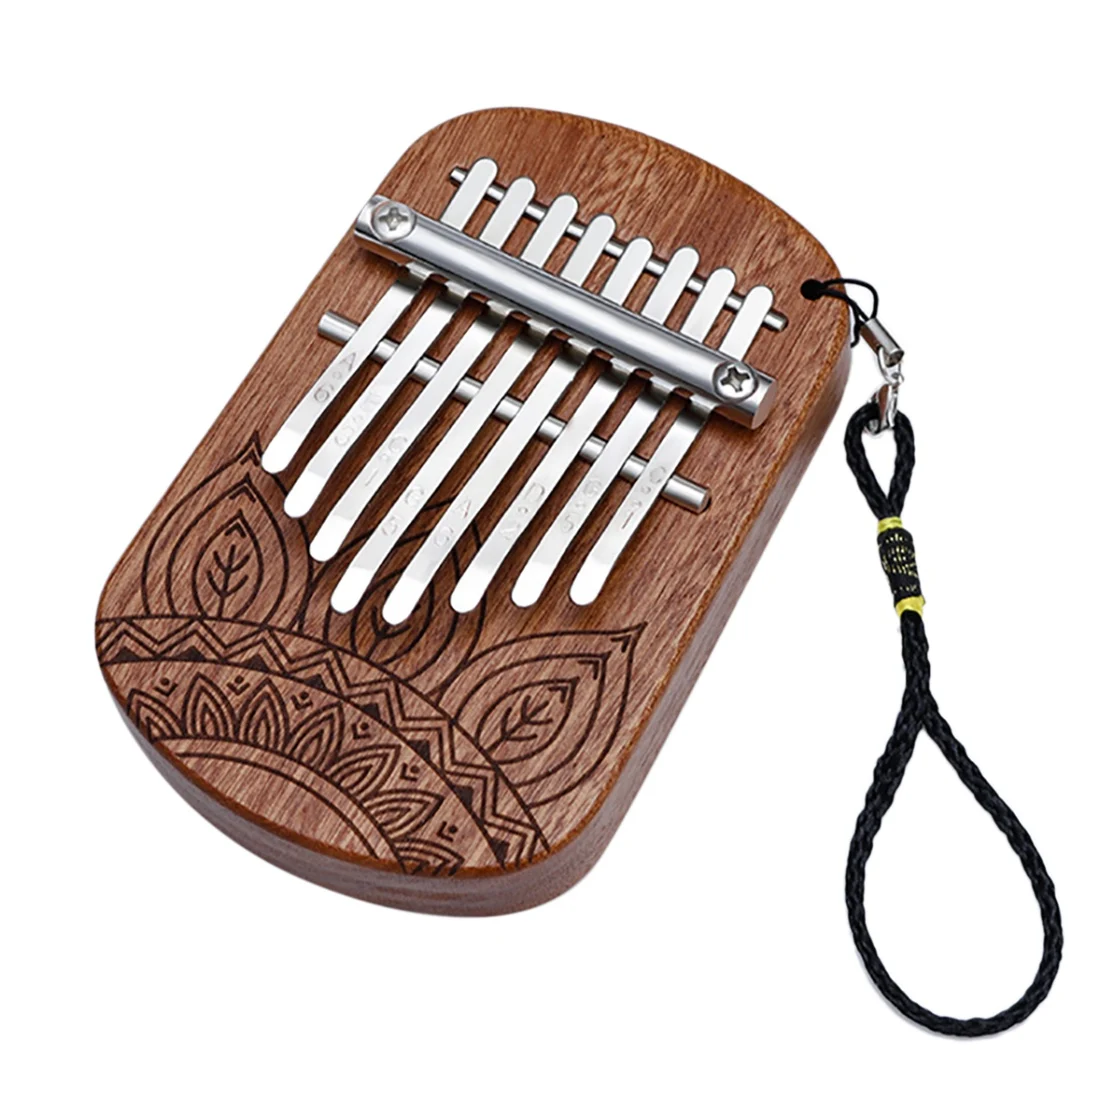 

8 Key Kalimba African Finger Thumb Piano Mahogany Wooden Keyboard Percussion Instrument Music Gift for Beginner